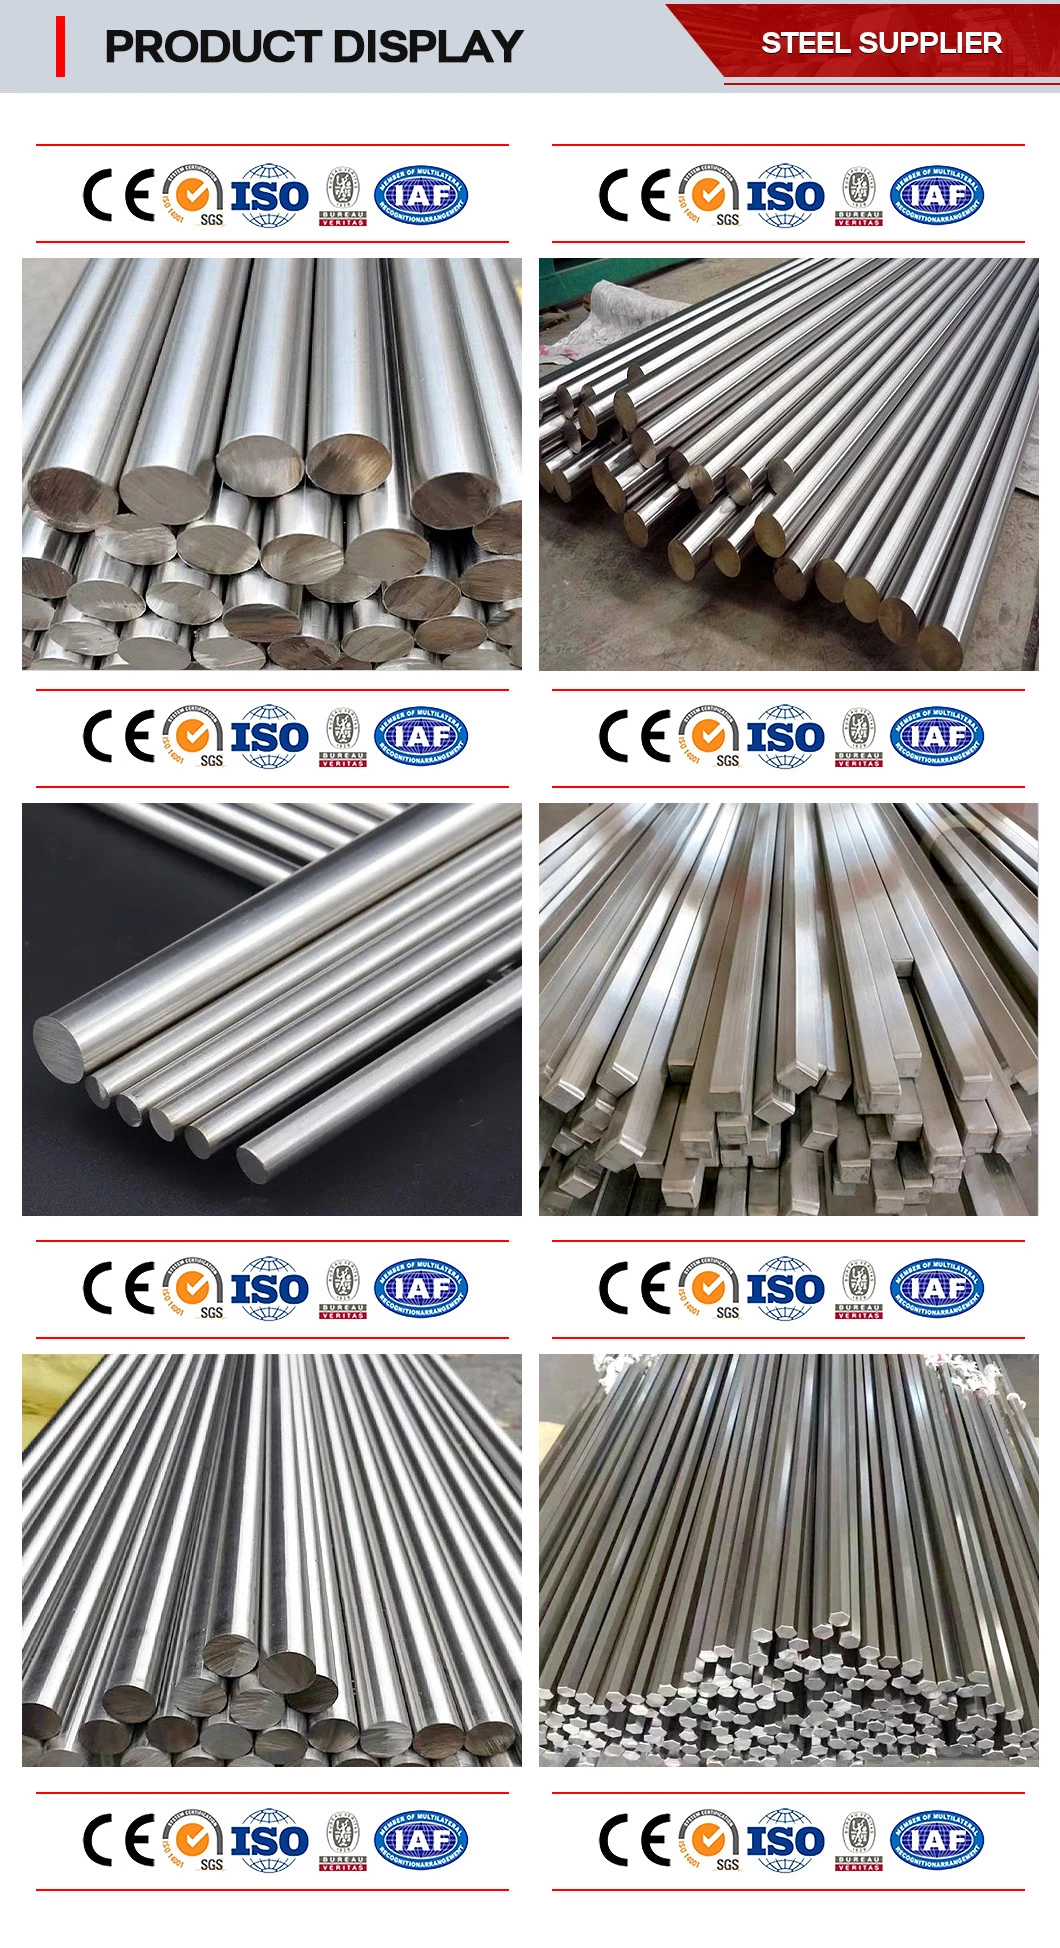 AISI 660 Stainless Steel Bar 1.4404 Round Bar AISI 304 316 321 Ss Bar